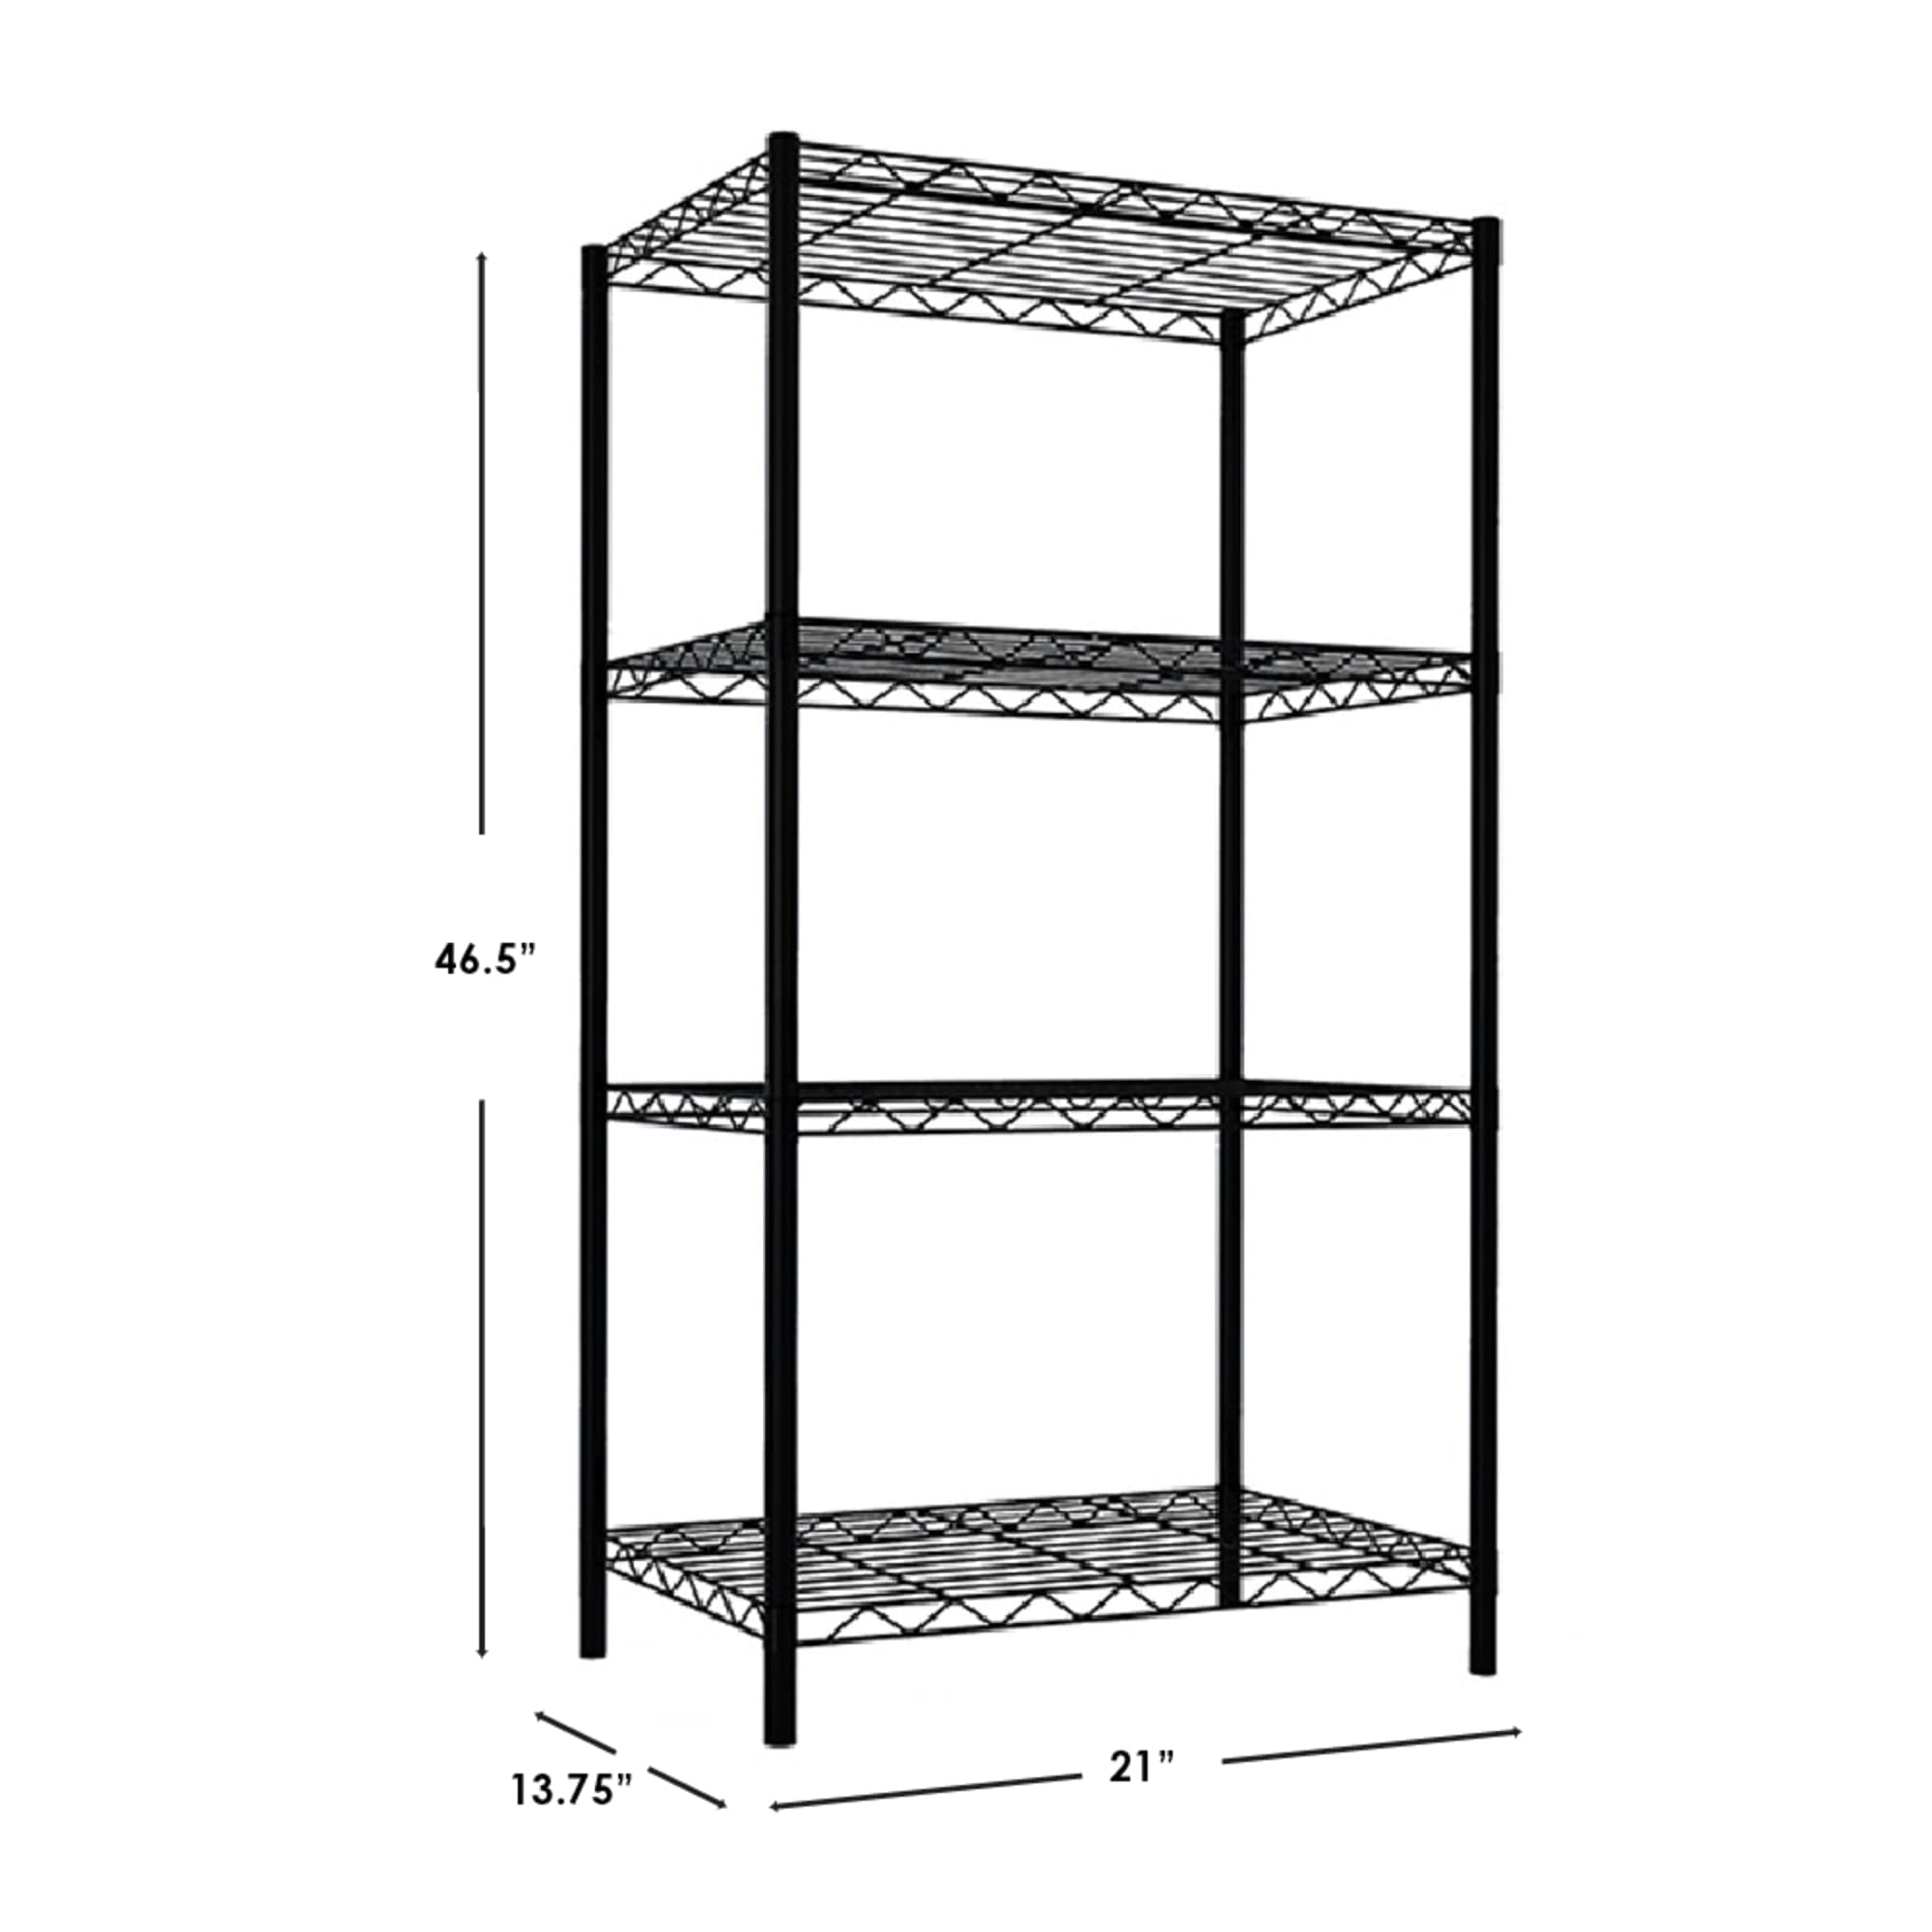 Home Basics 4 Tier Steel Wire Shelf, Black $40.00 EACH, CASE PACK OF 4